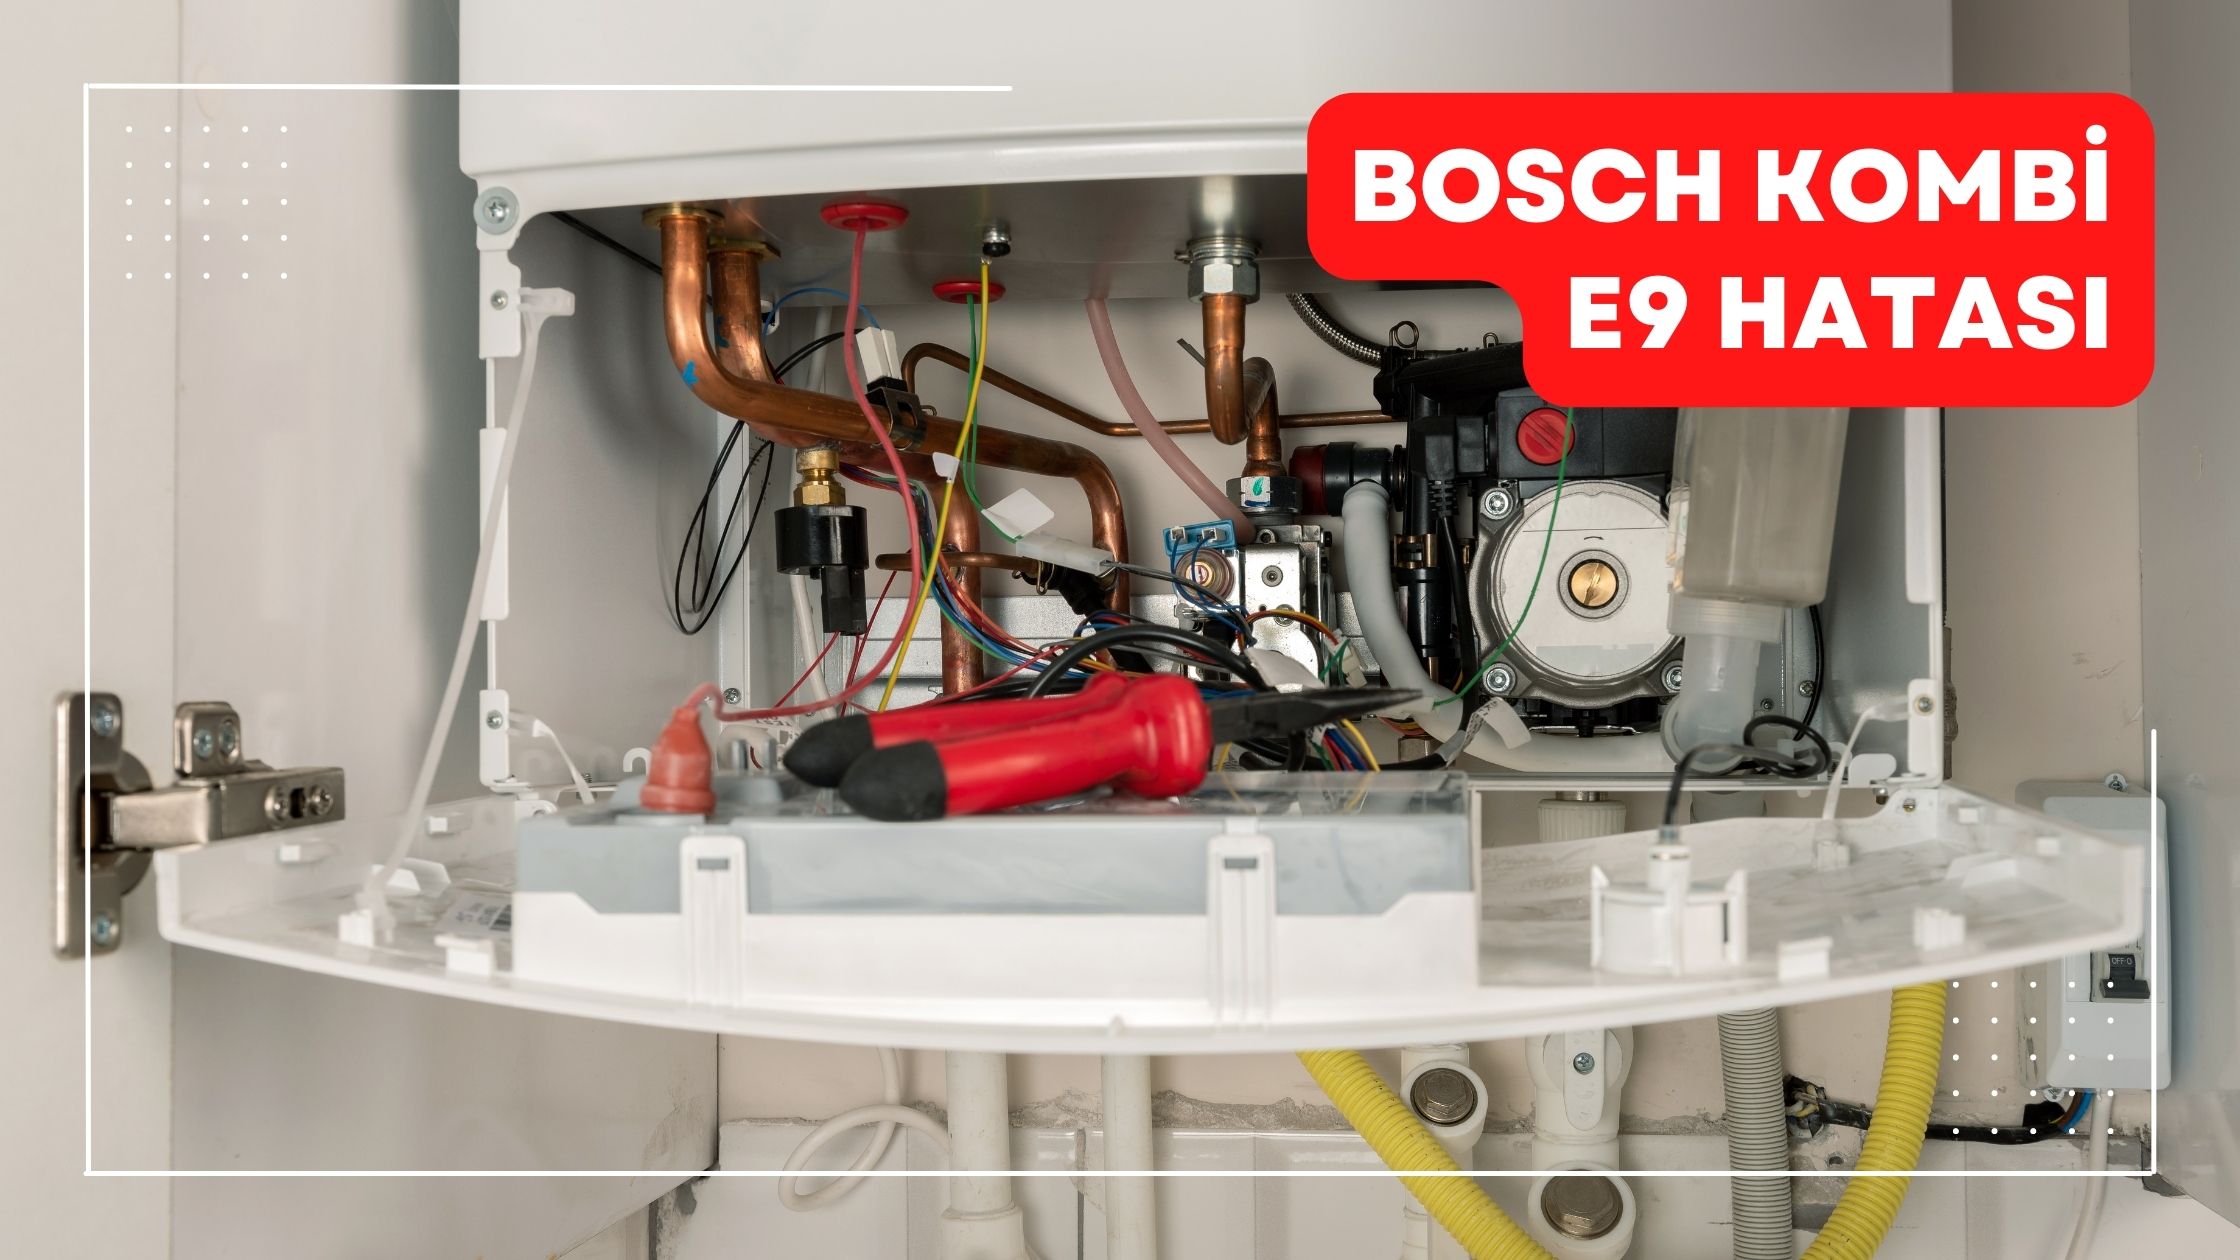 Bosch Kombi E9 Hatası